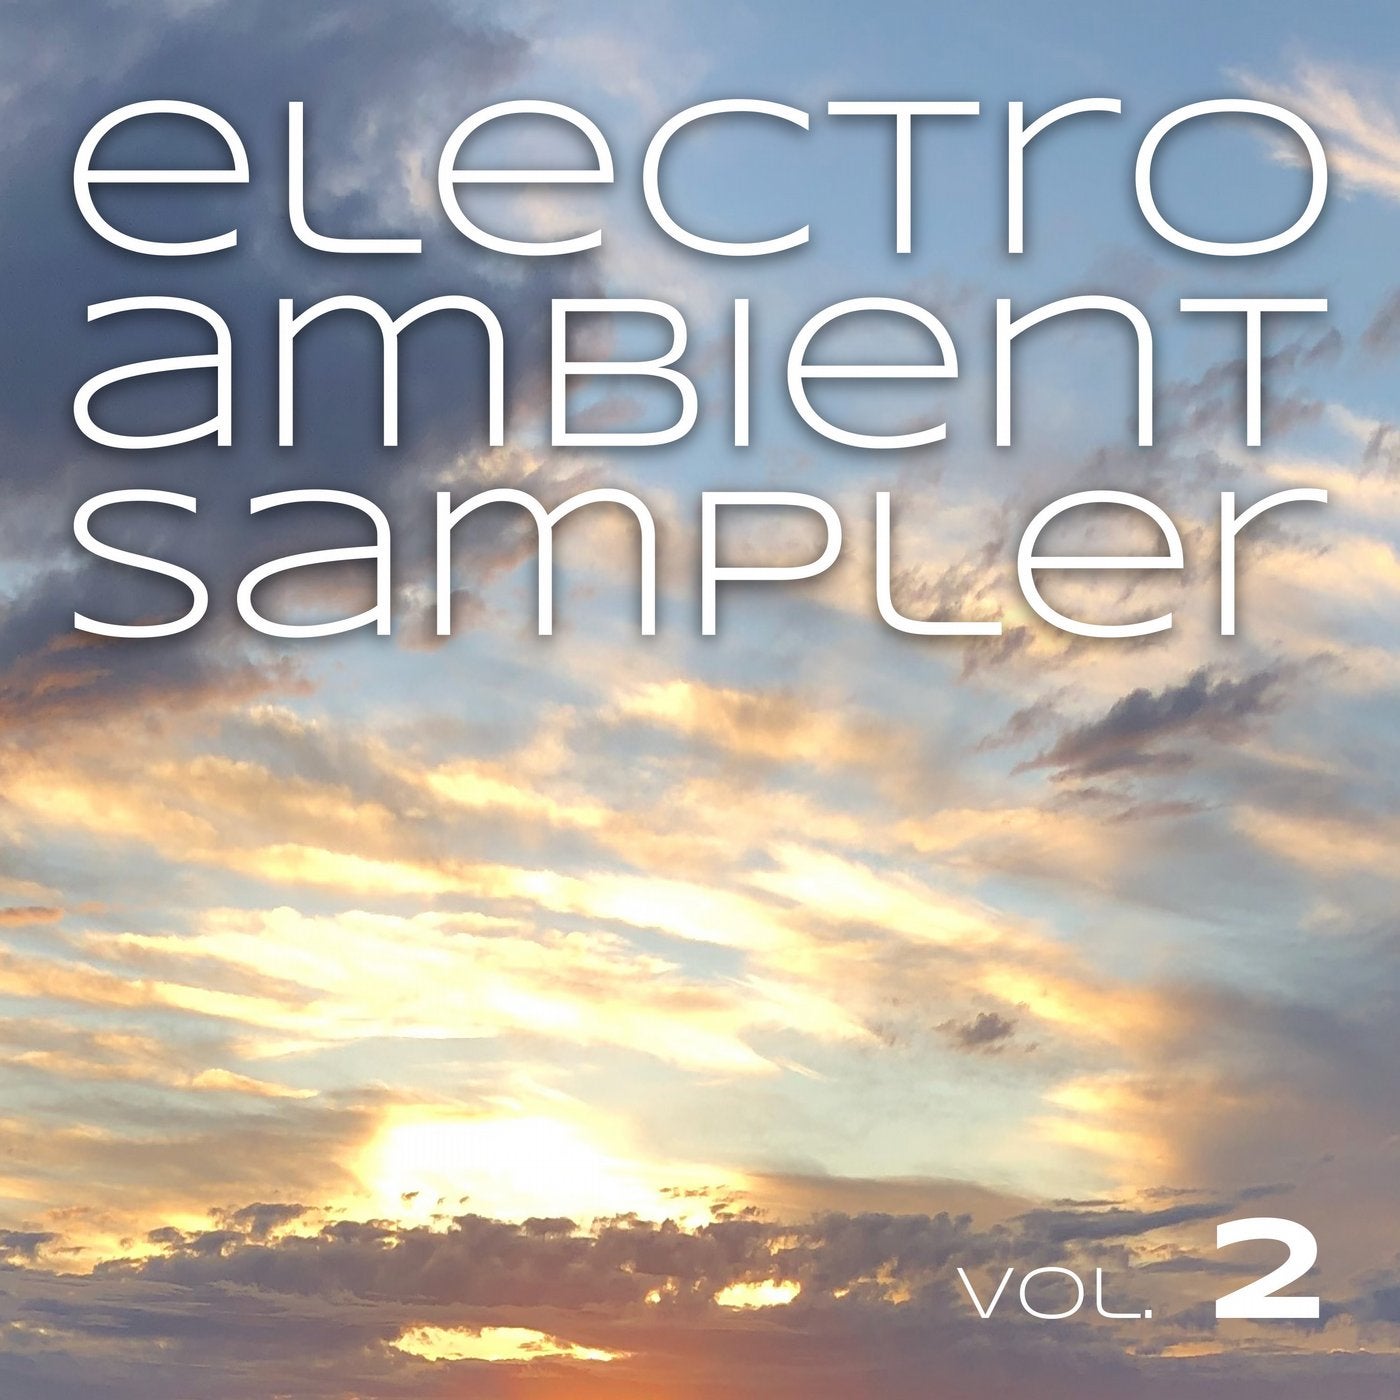 Electro Ambient Sampler, Vol. 2